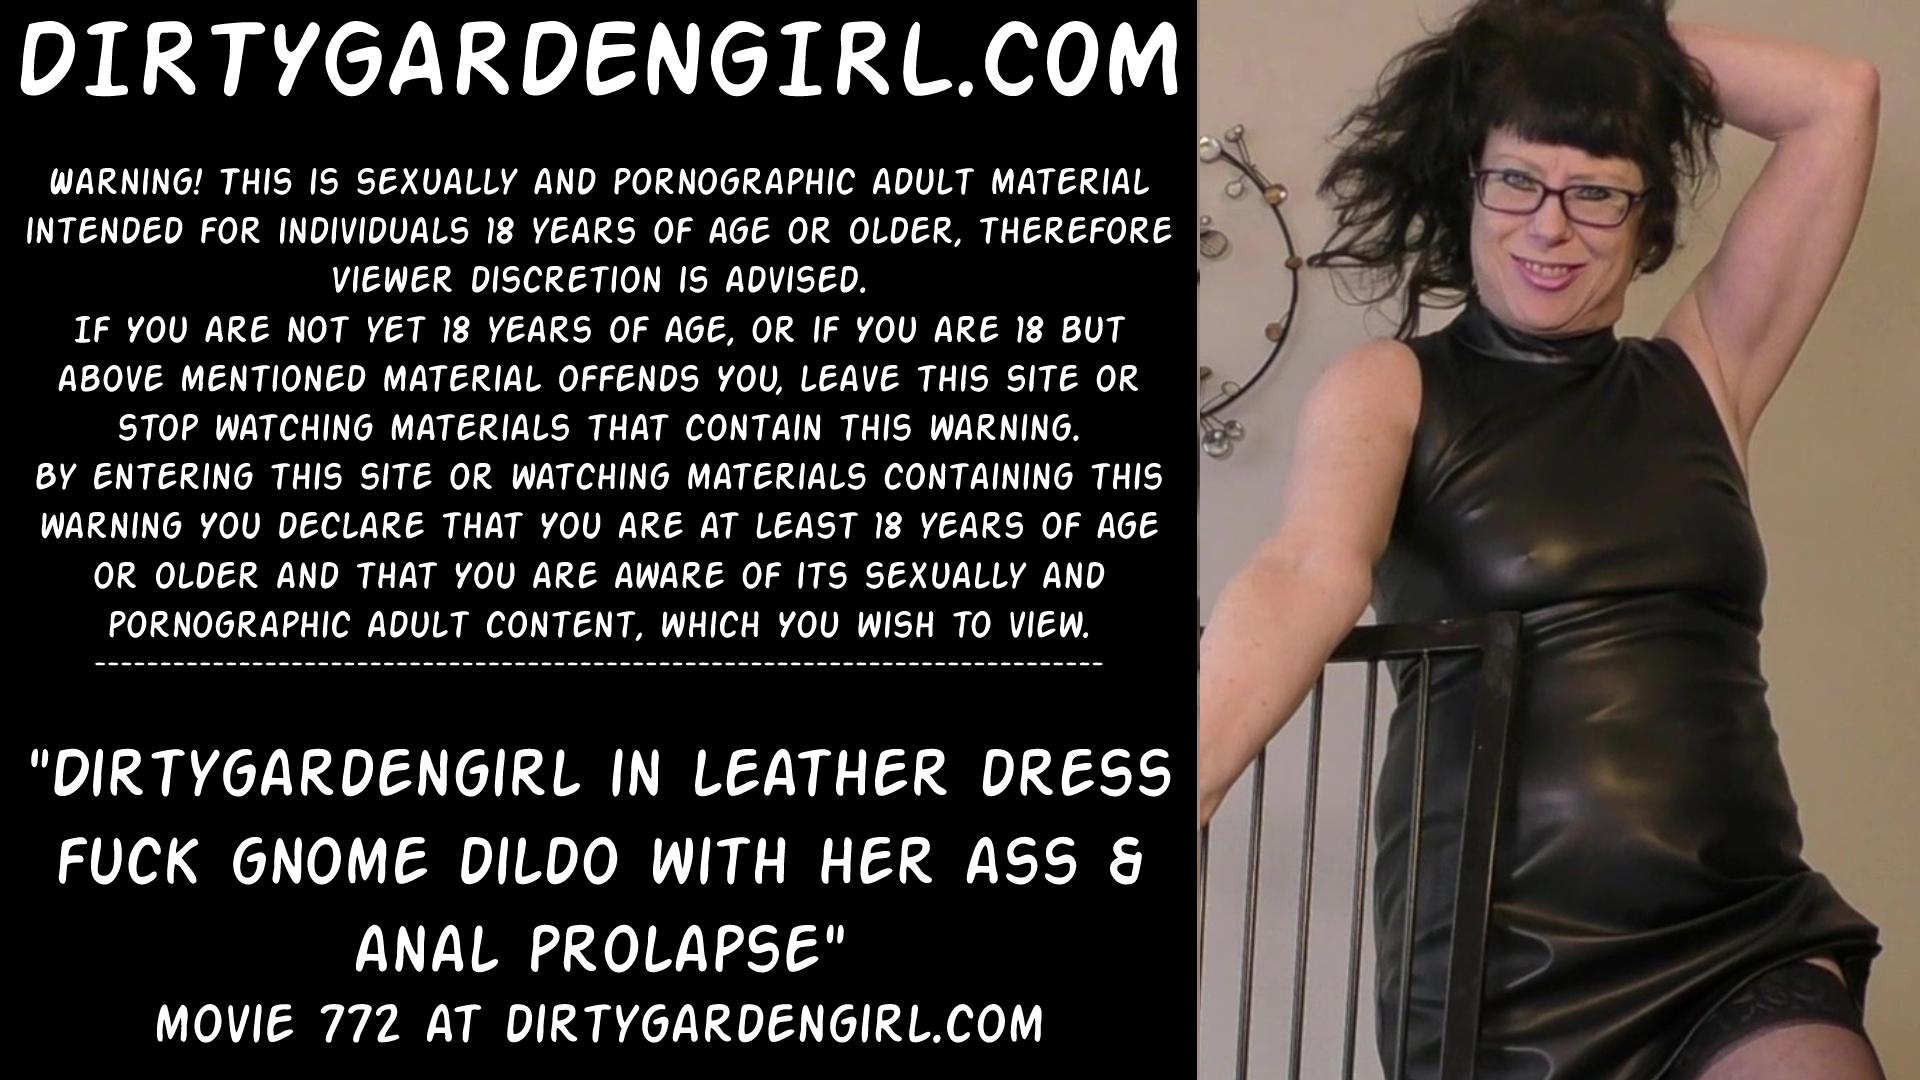 Dirtygardengirl in leather dress fuck gnome dildo anal